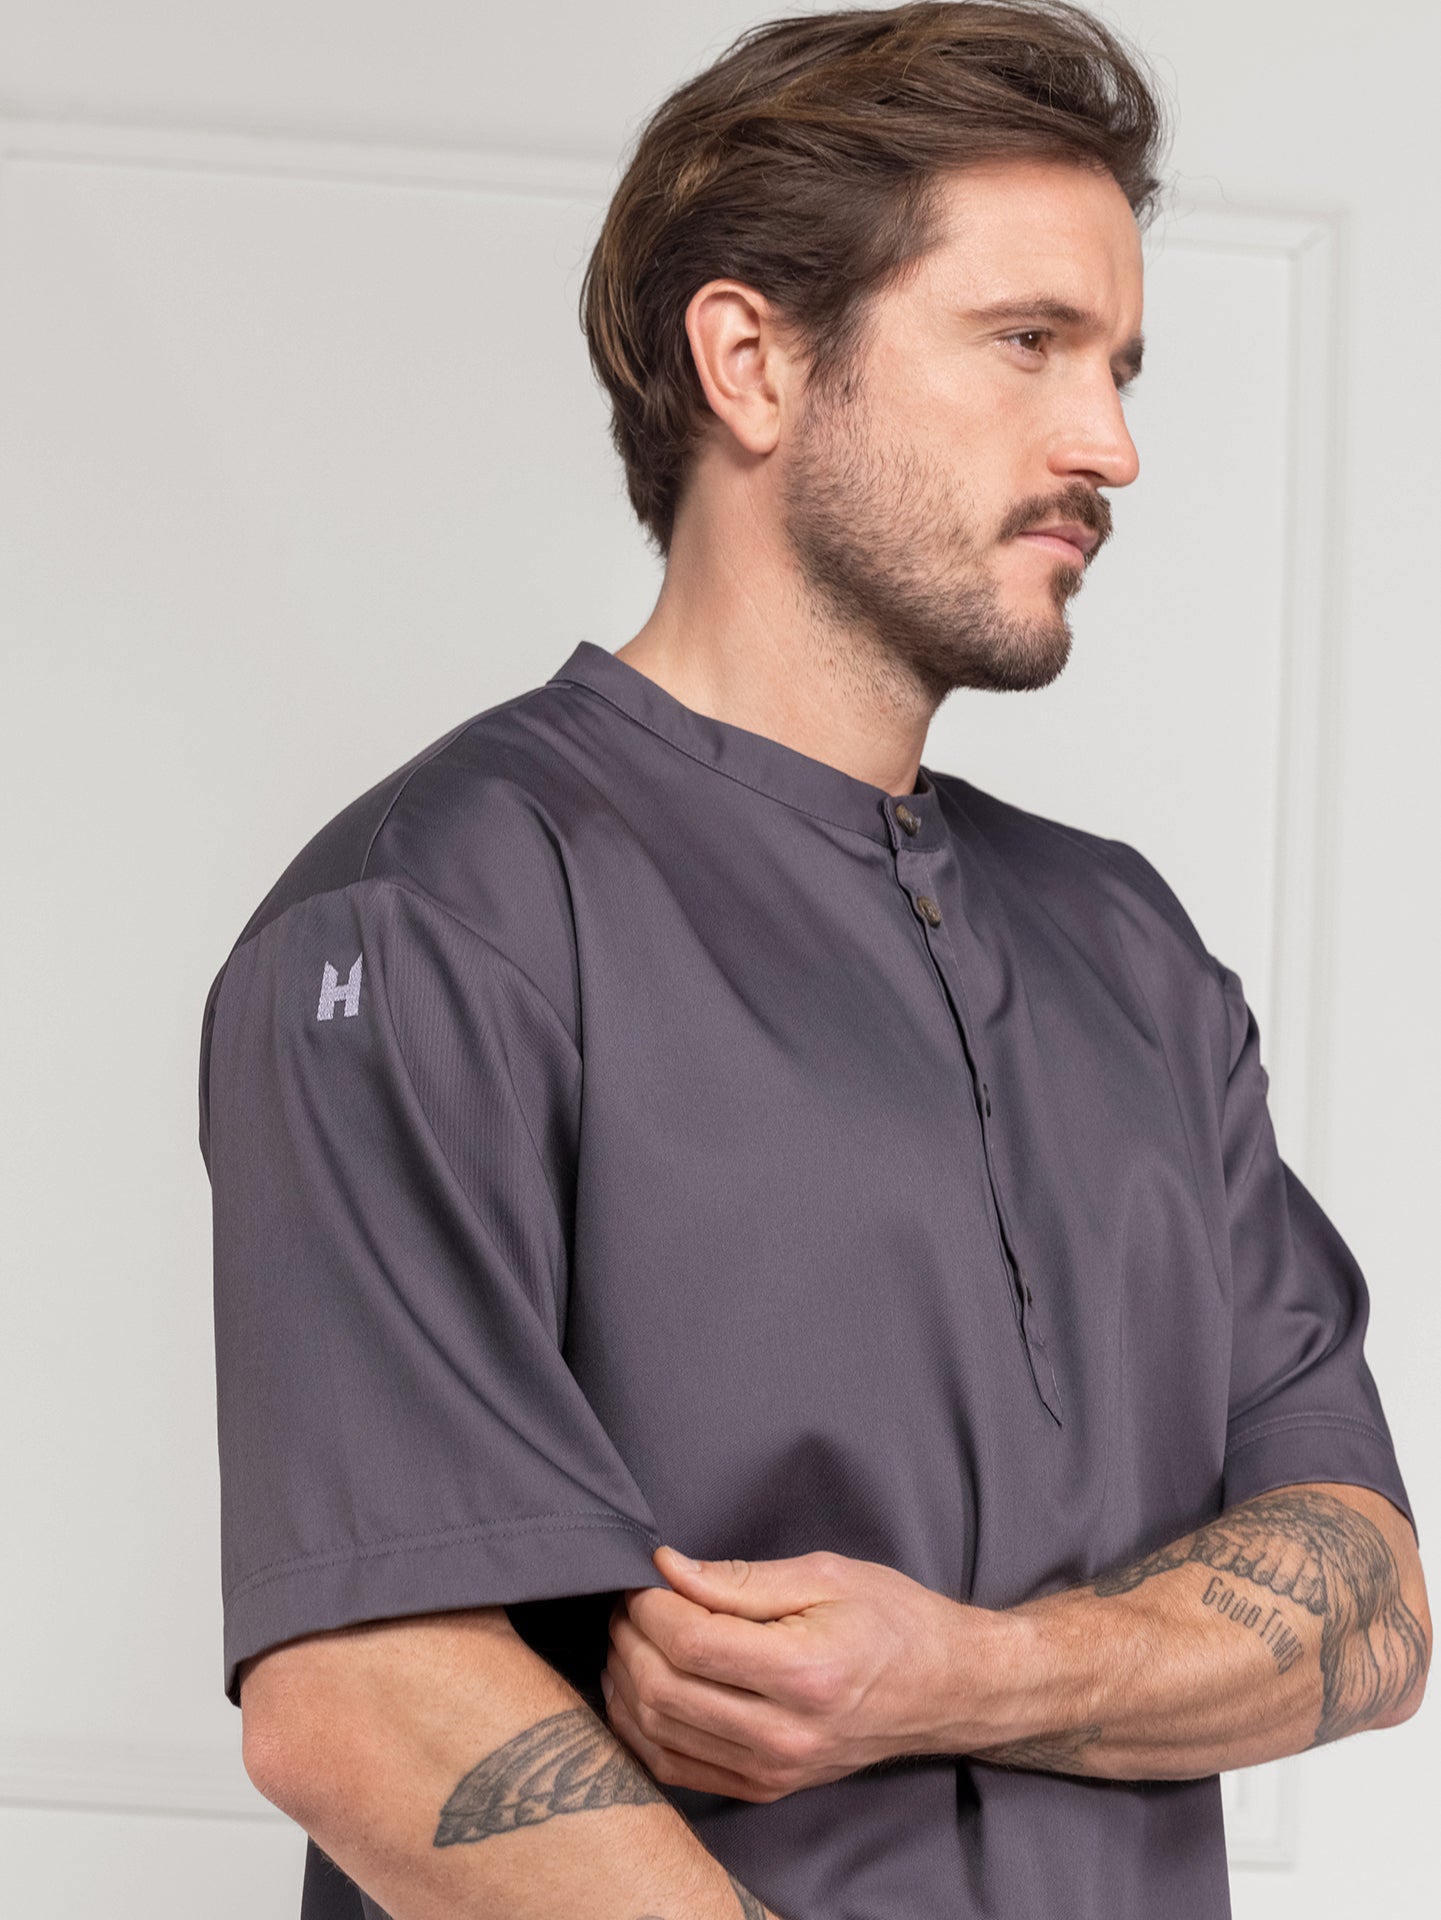 T-Shirt Gorgio Dark Grey by Le Nouveau Chef -  ChefsCotton